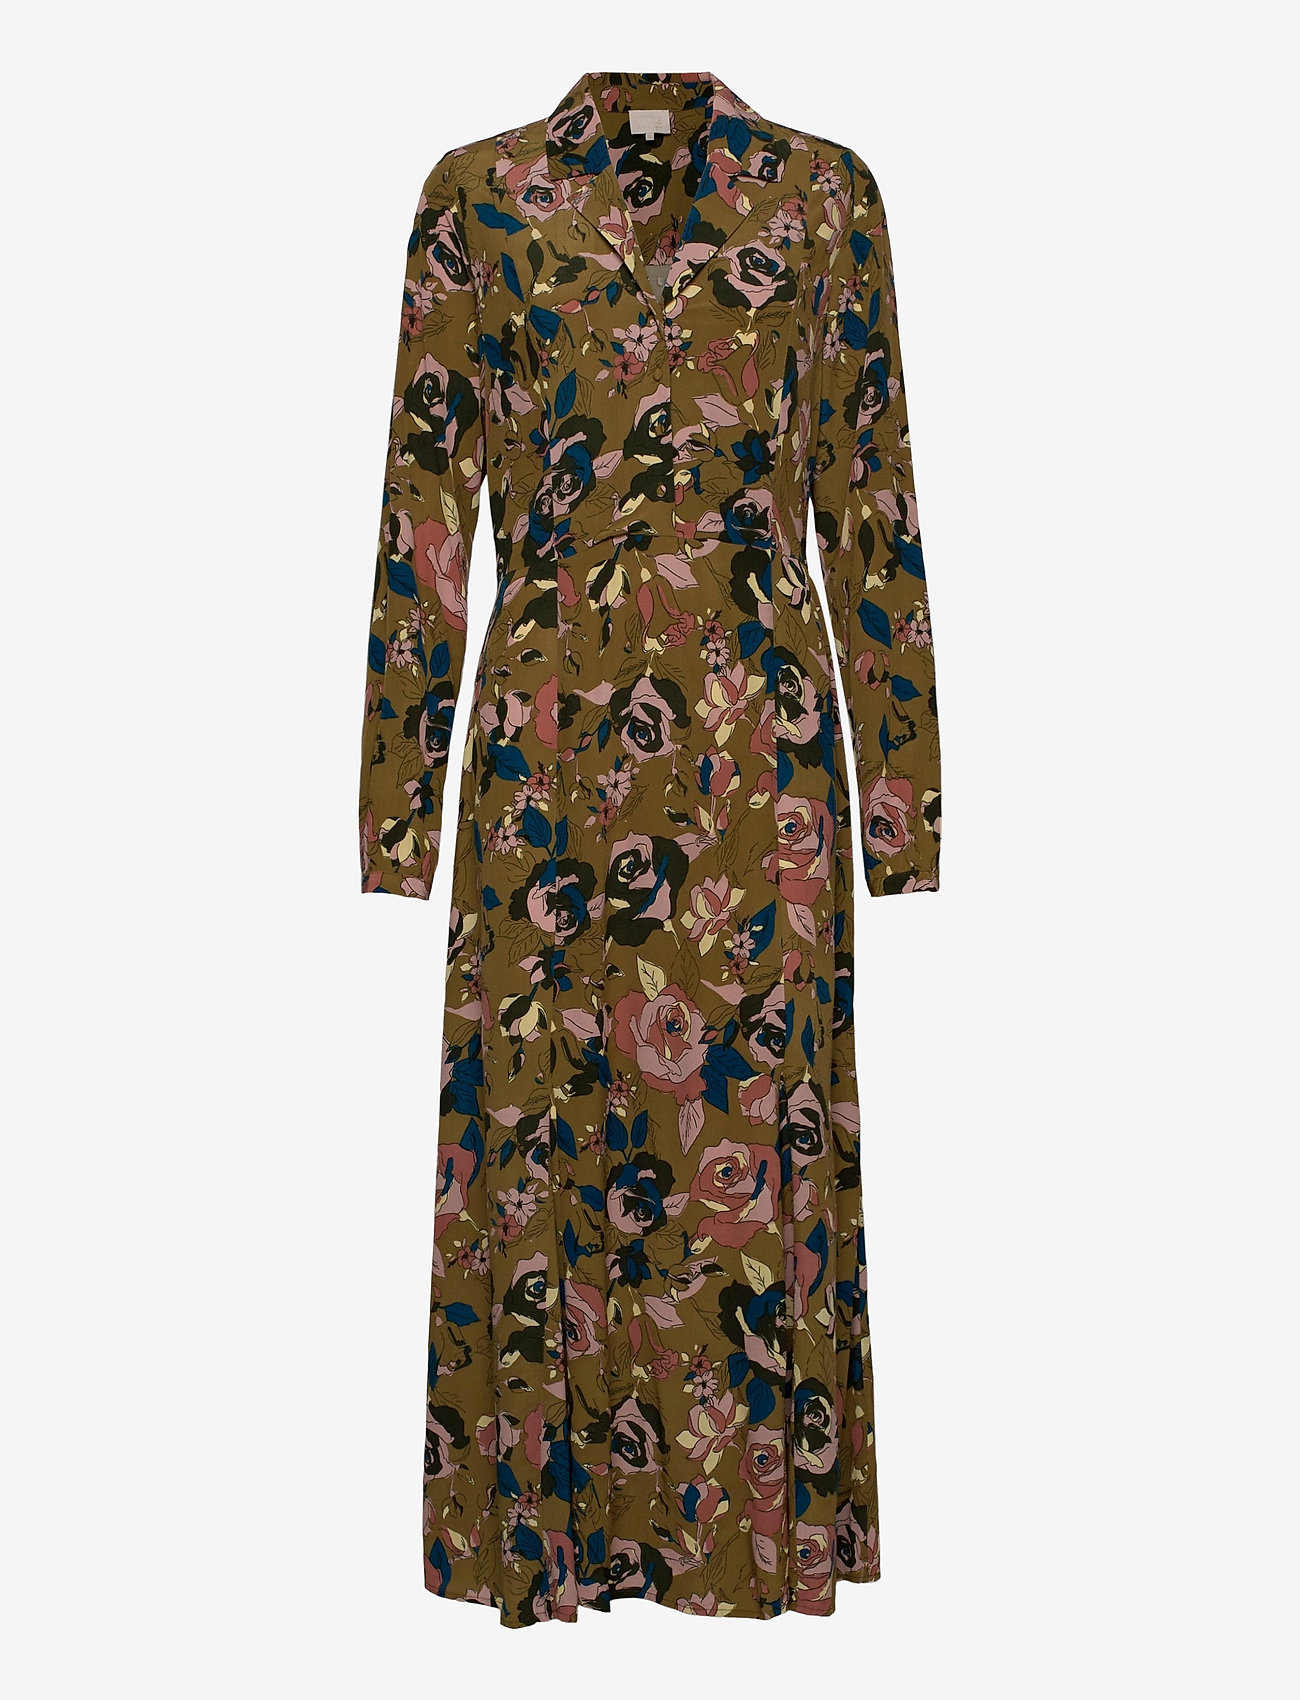 Minus - Vivie long dress - sukienki koszulowe - olive soft rose print - 0